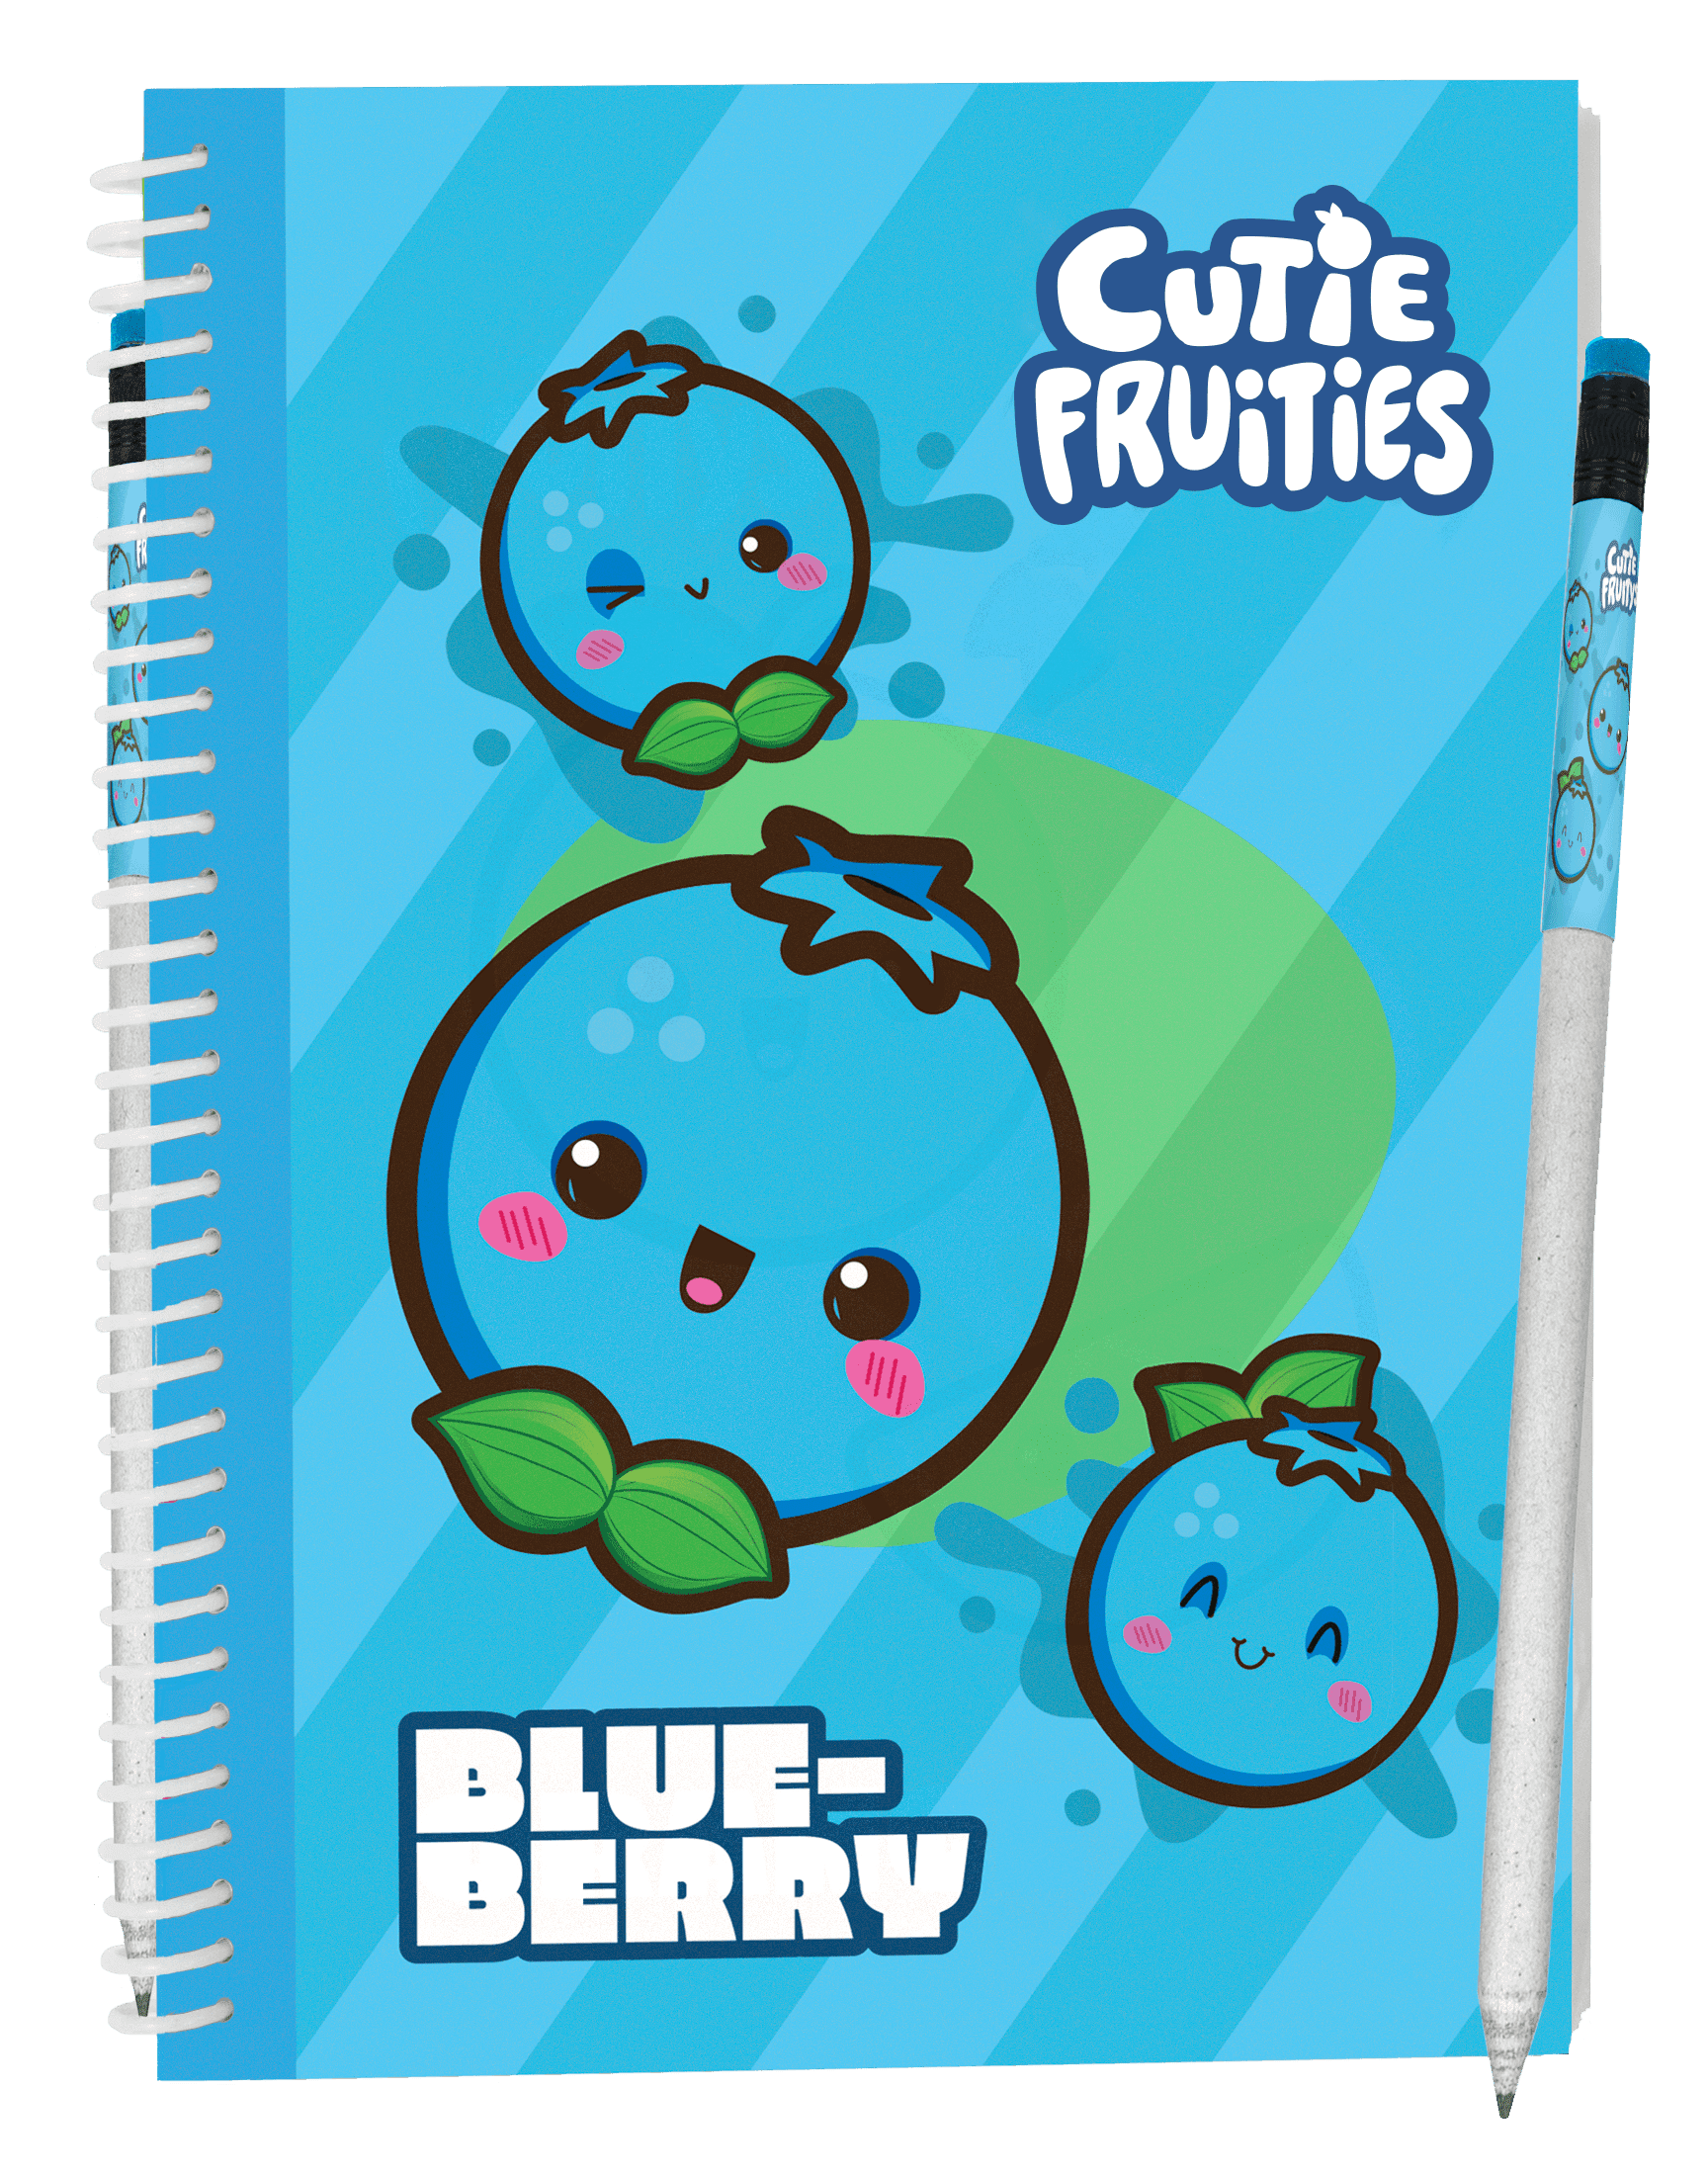 Scentco Cutie Fruities Sketch Sniff Sketch Pad Blueberry Scented Cover Walmart Com Walmart Com